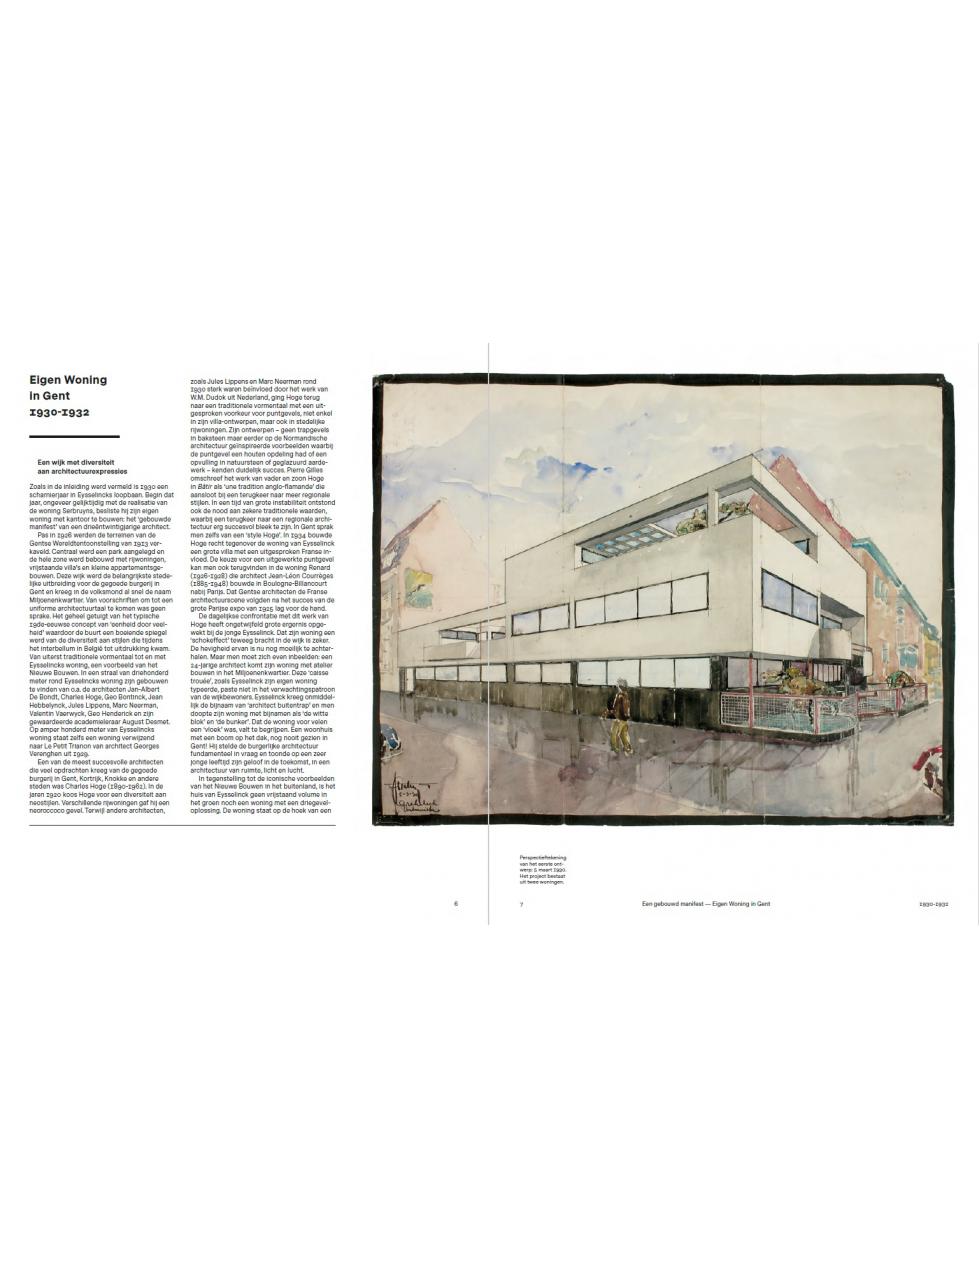 Book: GASTON EYSSELINCK: In de voetsporen van Le Corbusier (NL)